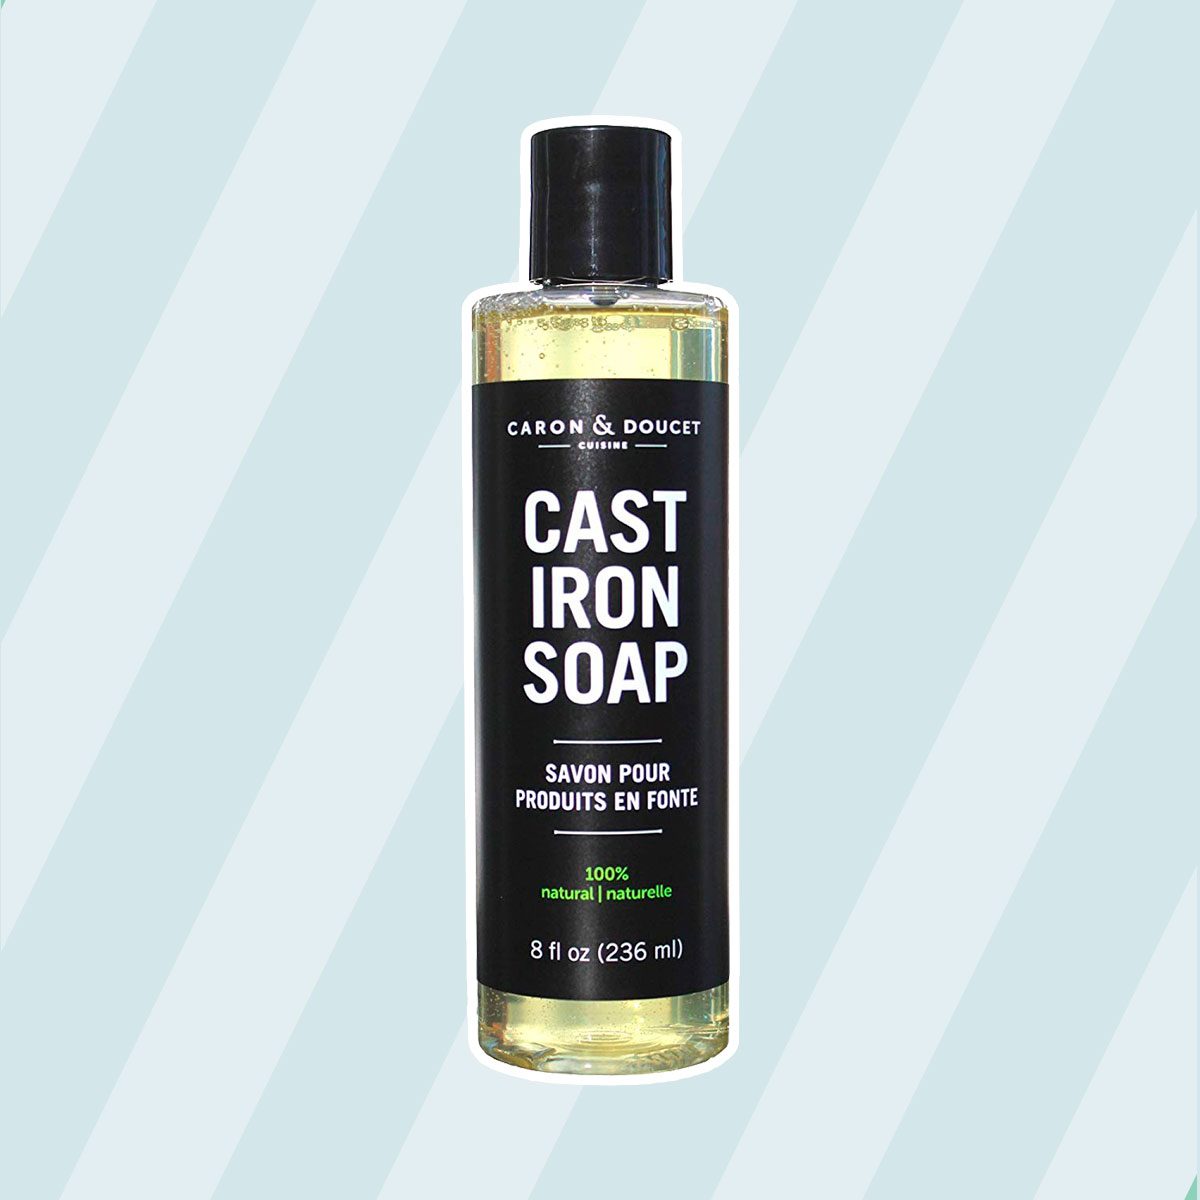 https://www.tasteofhome.com/wp-content/uploads/2019/04/cast-iron-soap.jpg?fit=700%2C700